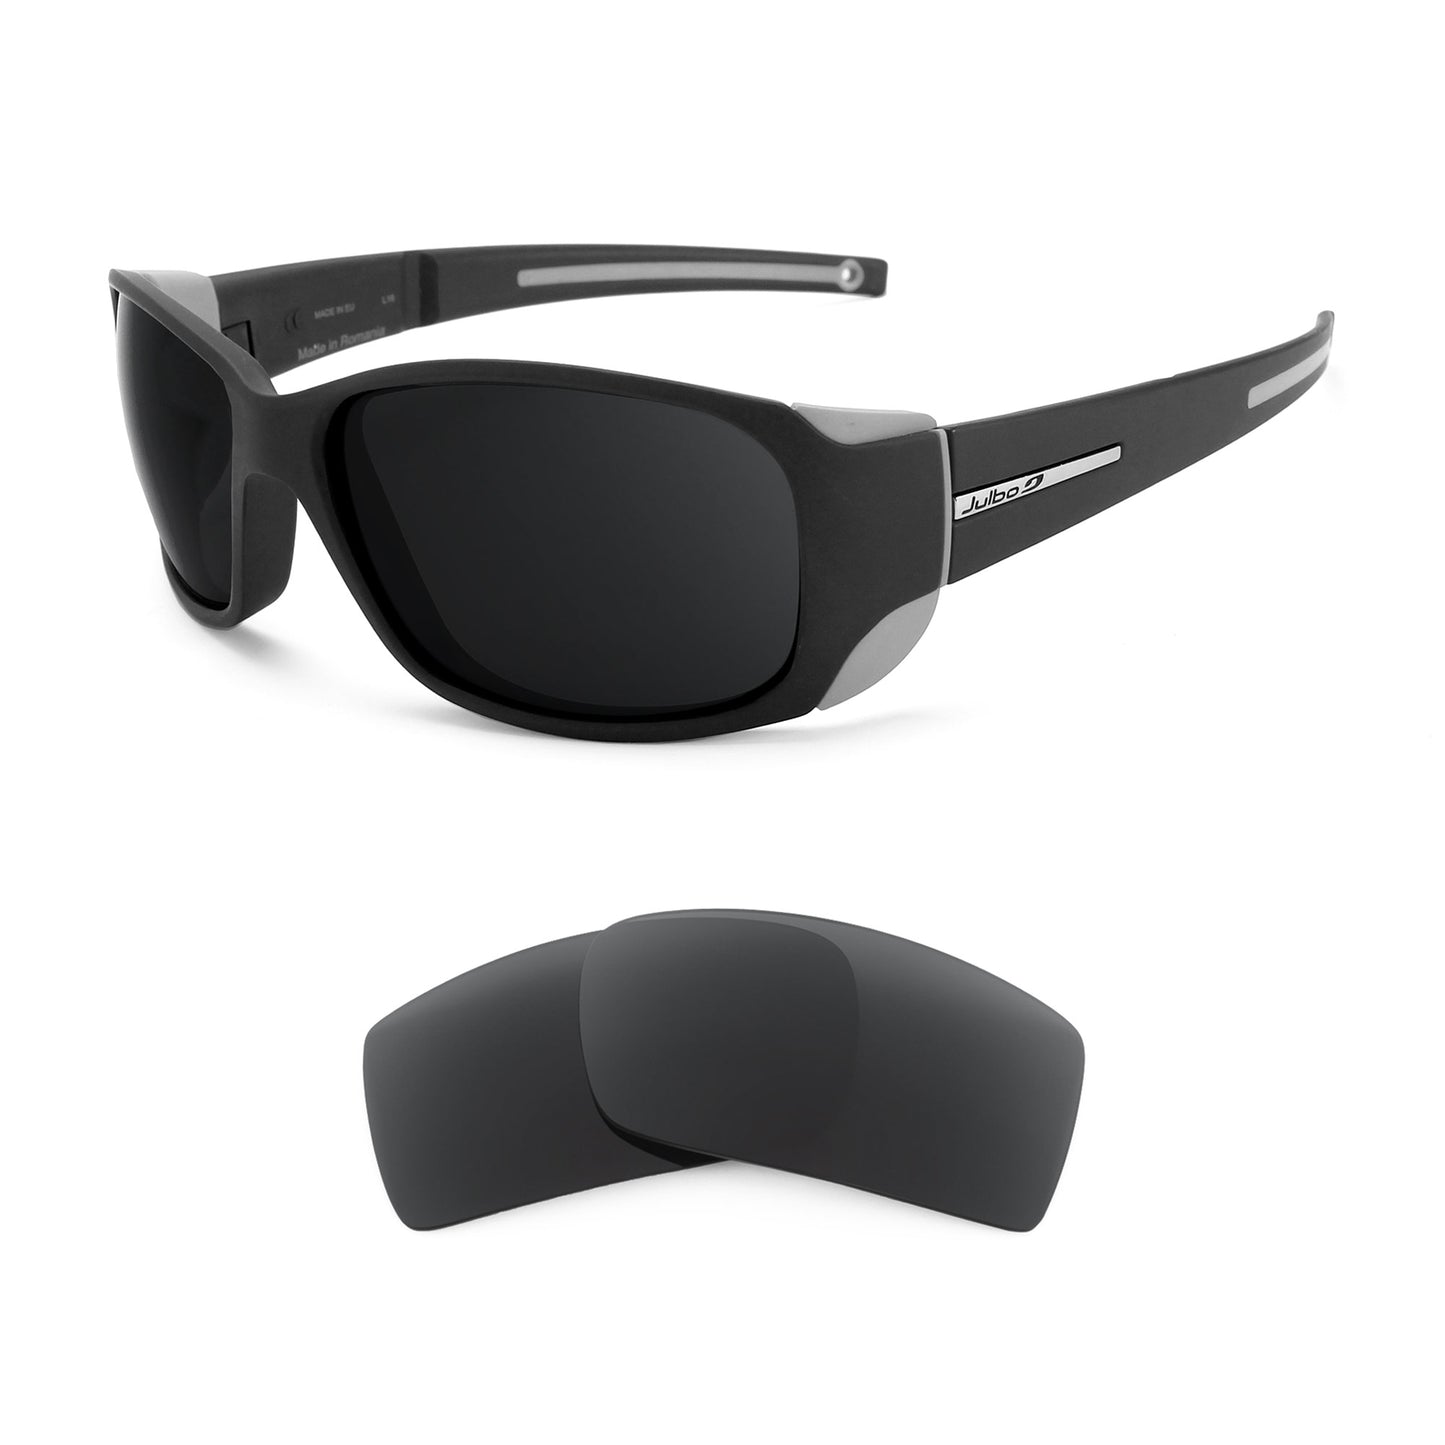 Julbo MonteRosa sunglasses with replacement lenses